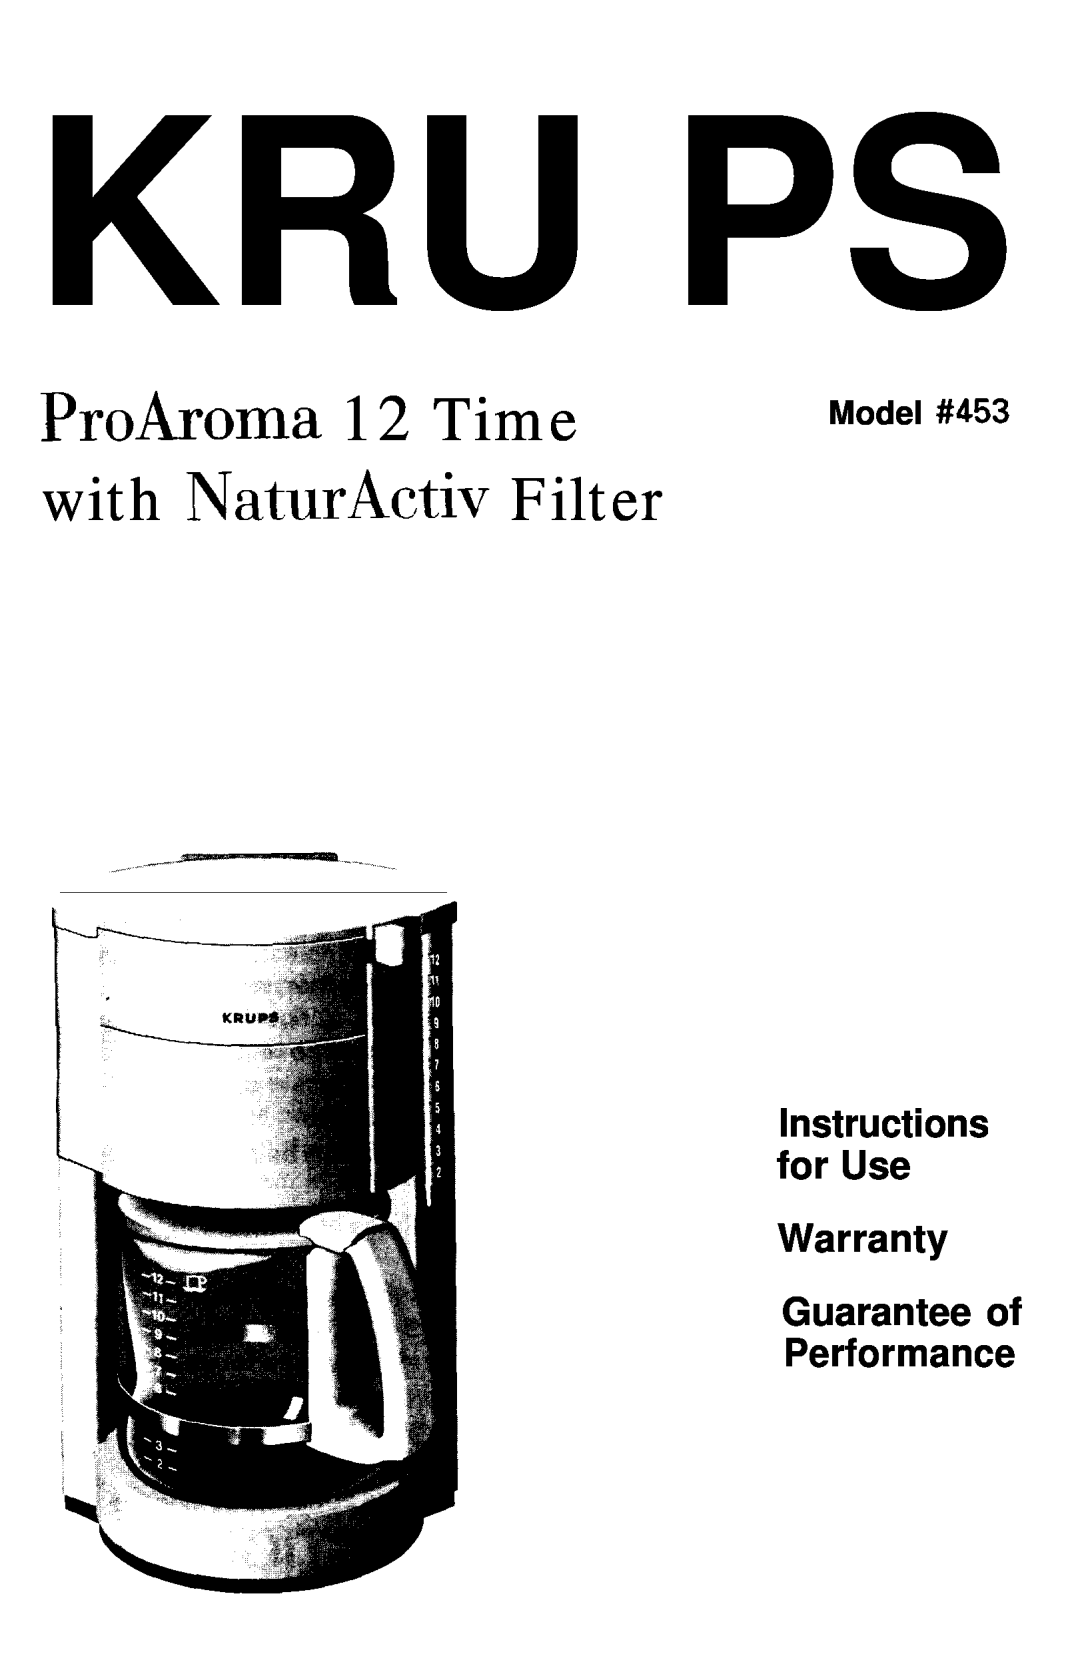 Krups warranty Model #453, Kru Ps, ProAroma 12 Time with NaturActiv Filter, Warranty, Instructions for Use 